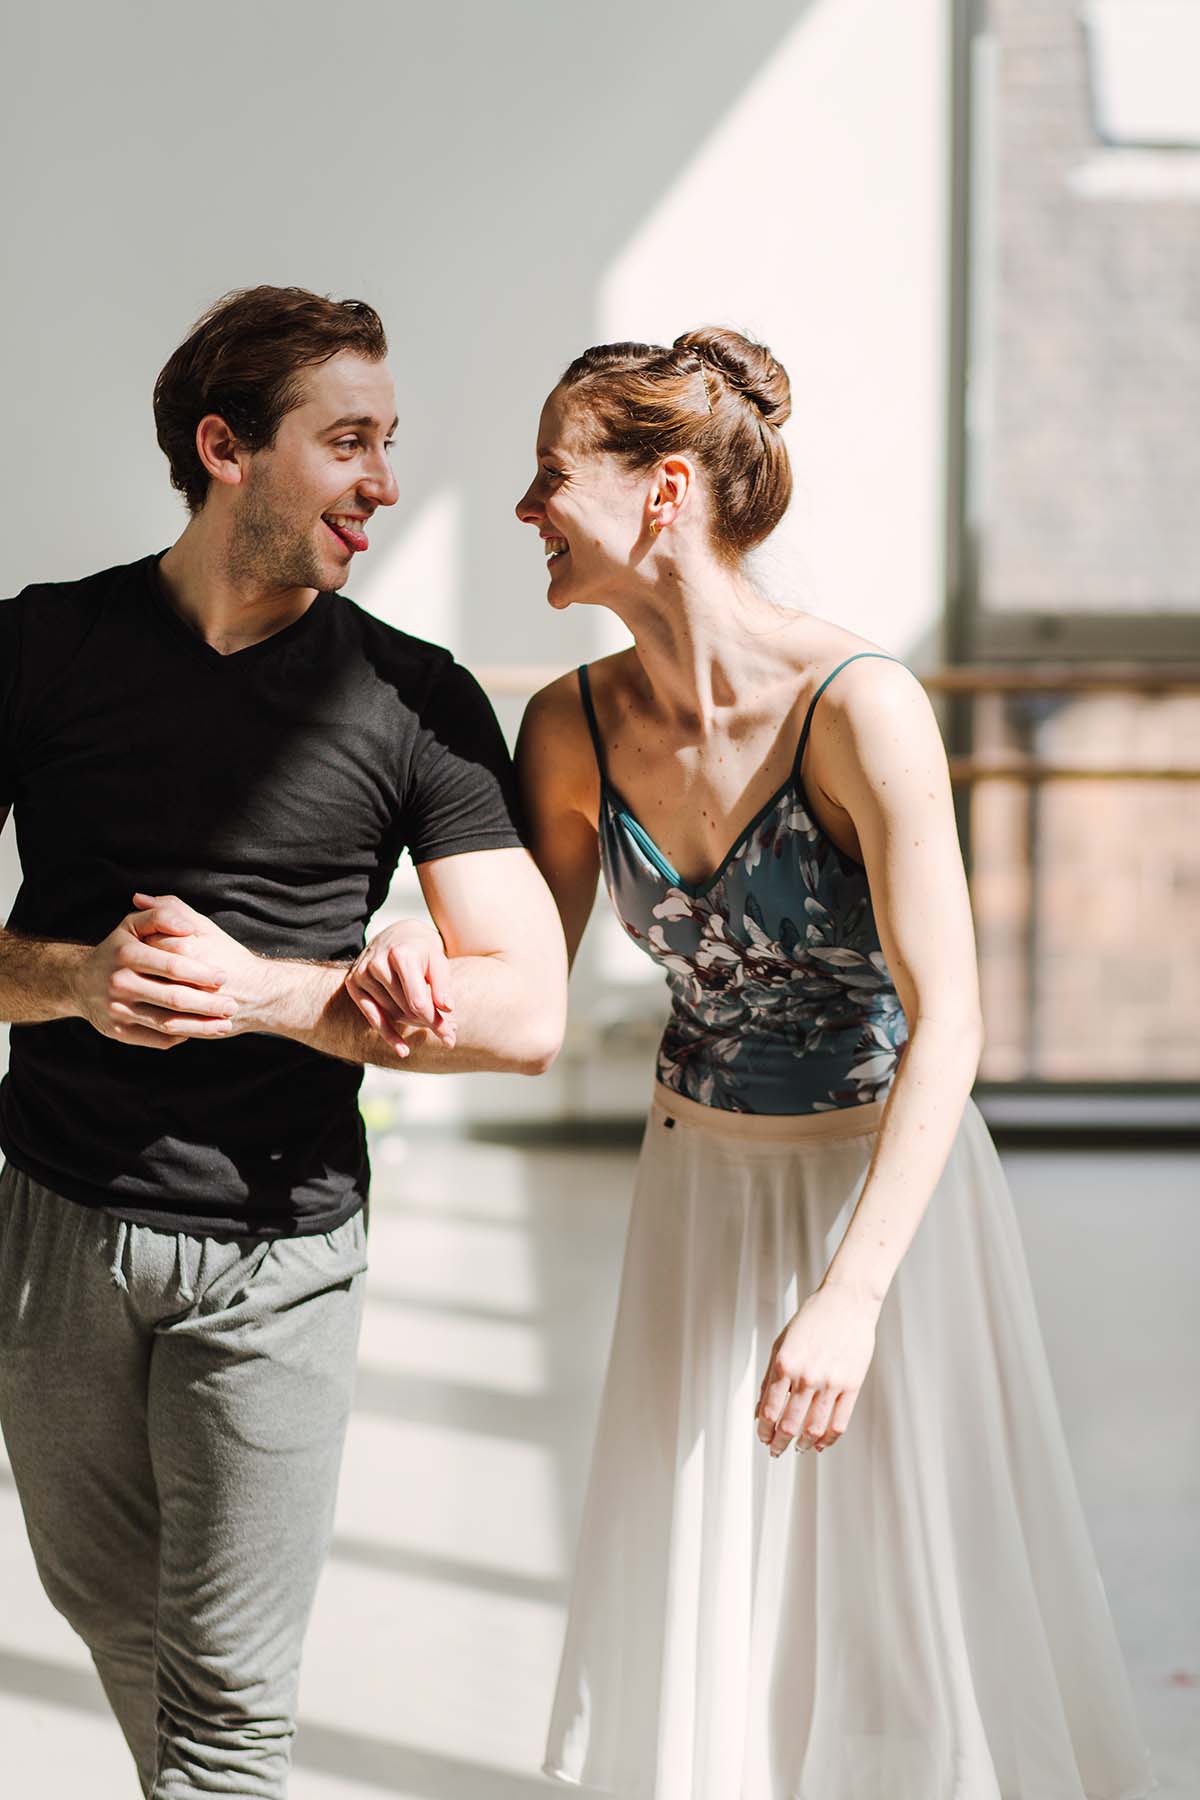 Scottish Ballet's Roseanna and Bruno joke around during rehearsals in the studio